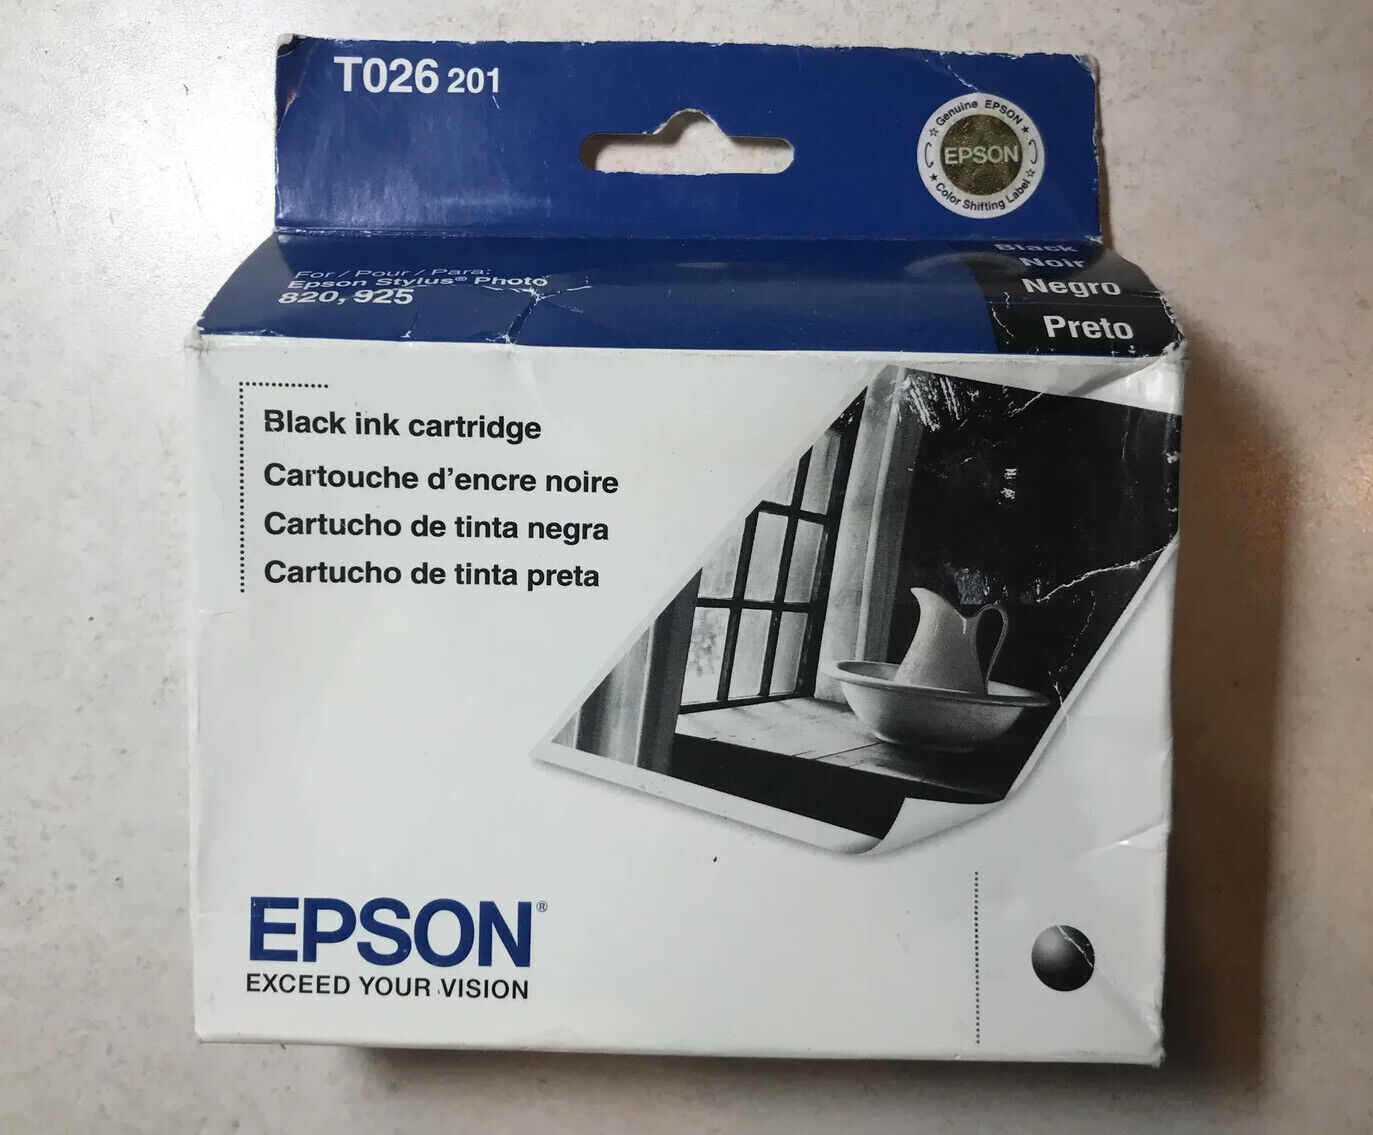 EPSON 820 925 T026-201 Stylus Photo Black Genuine Ink Cartridge Exp 04/2010